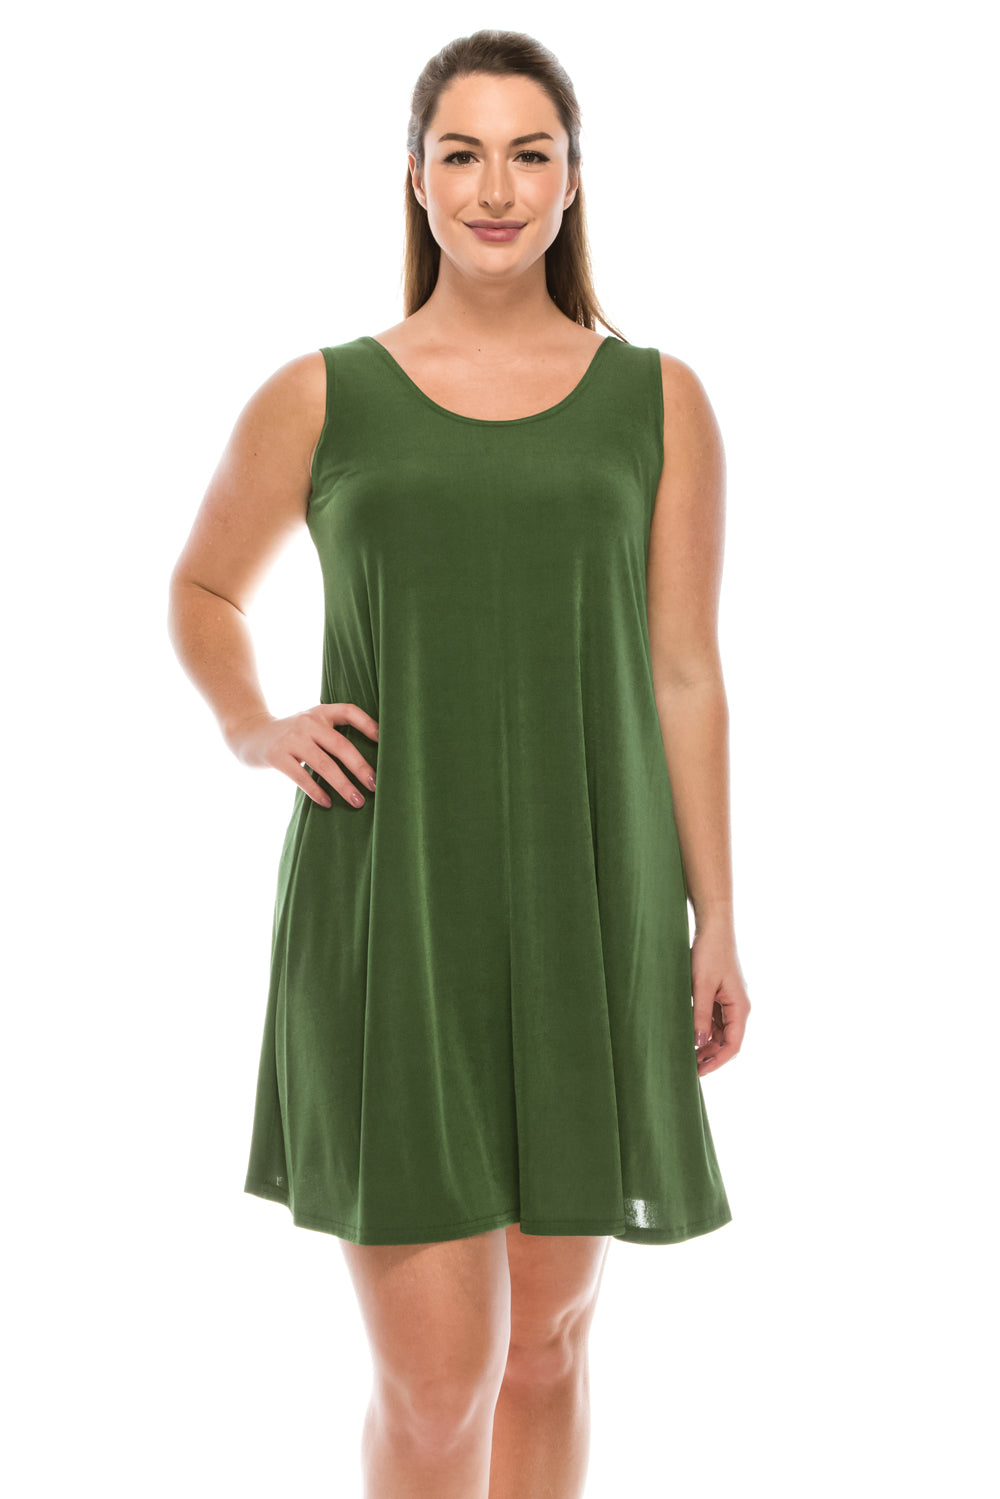 Jostar Women's Stretchy Short Tank Dress, 703BN-T - Jostar Online